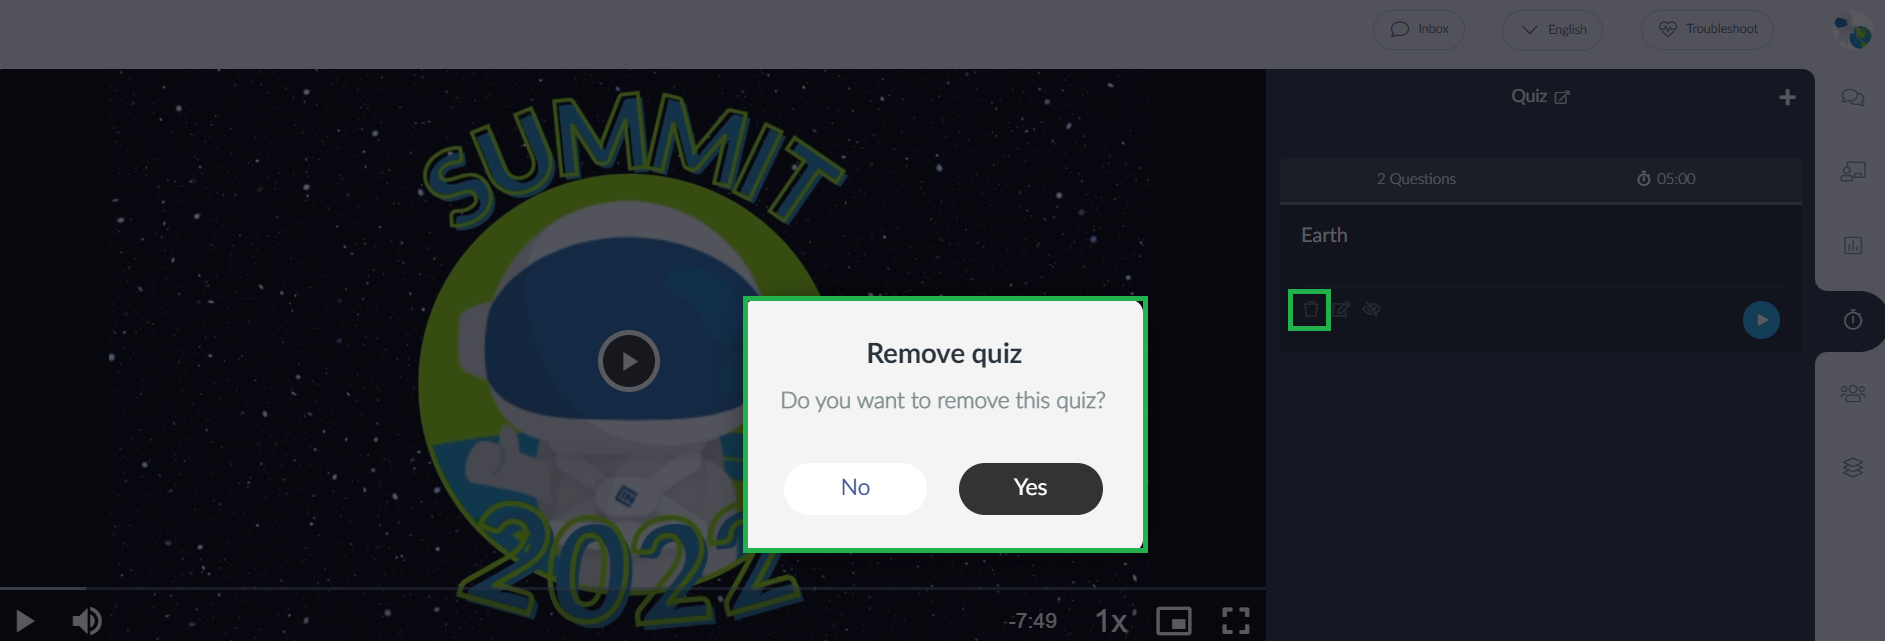 Remove quiz